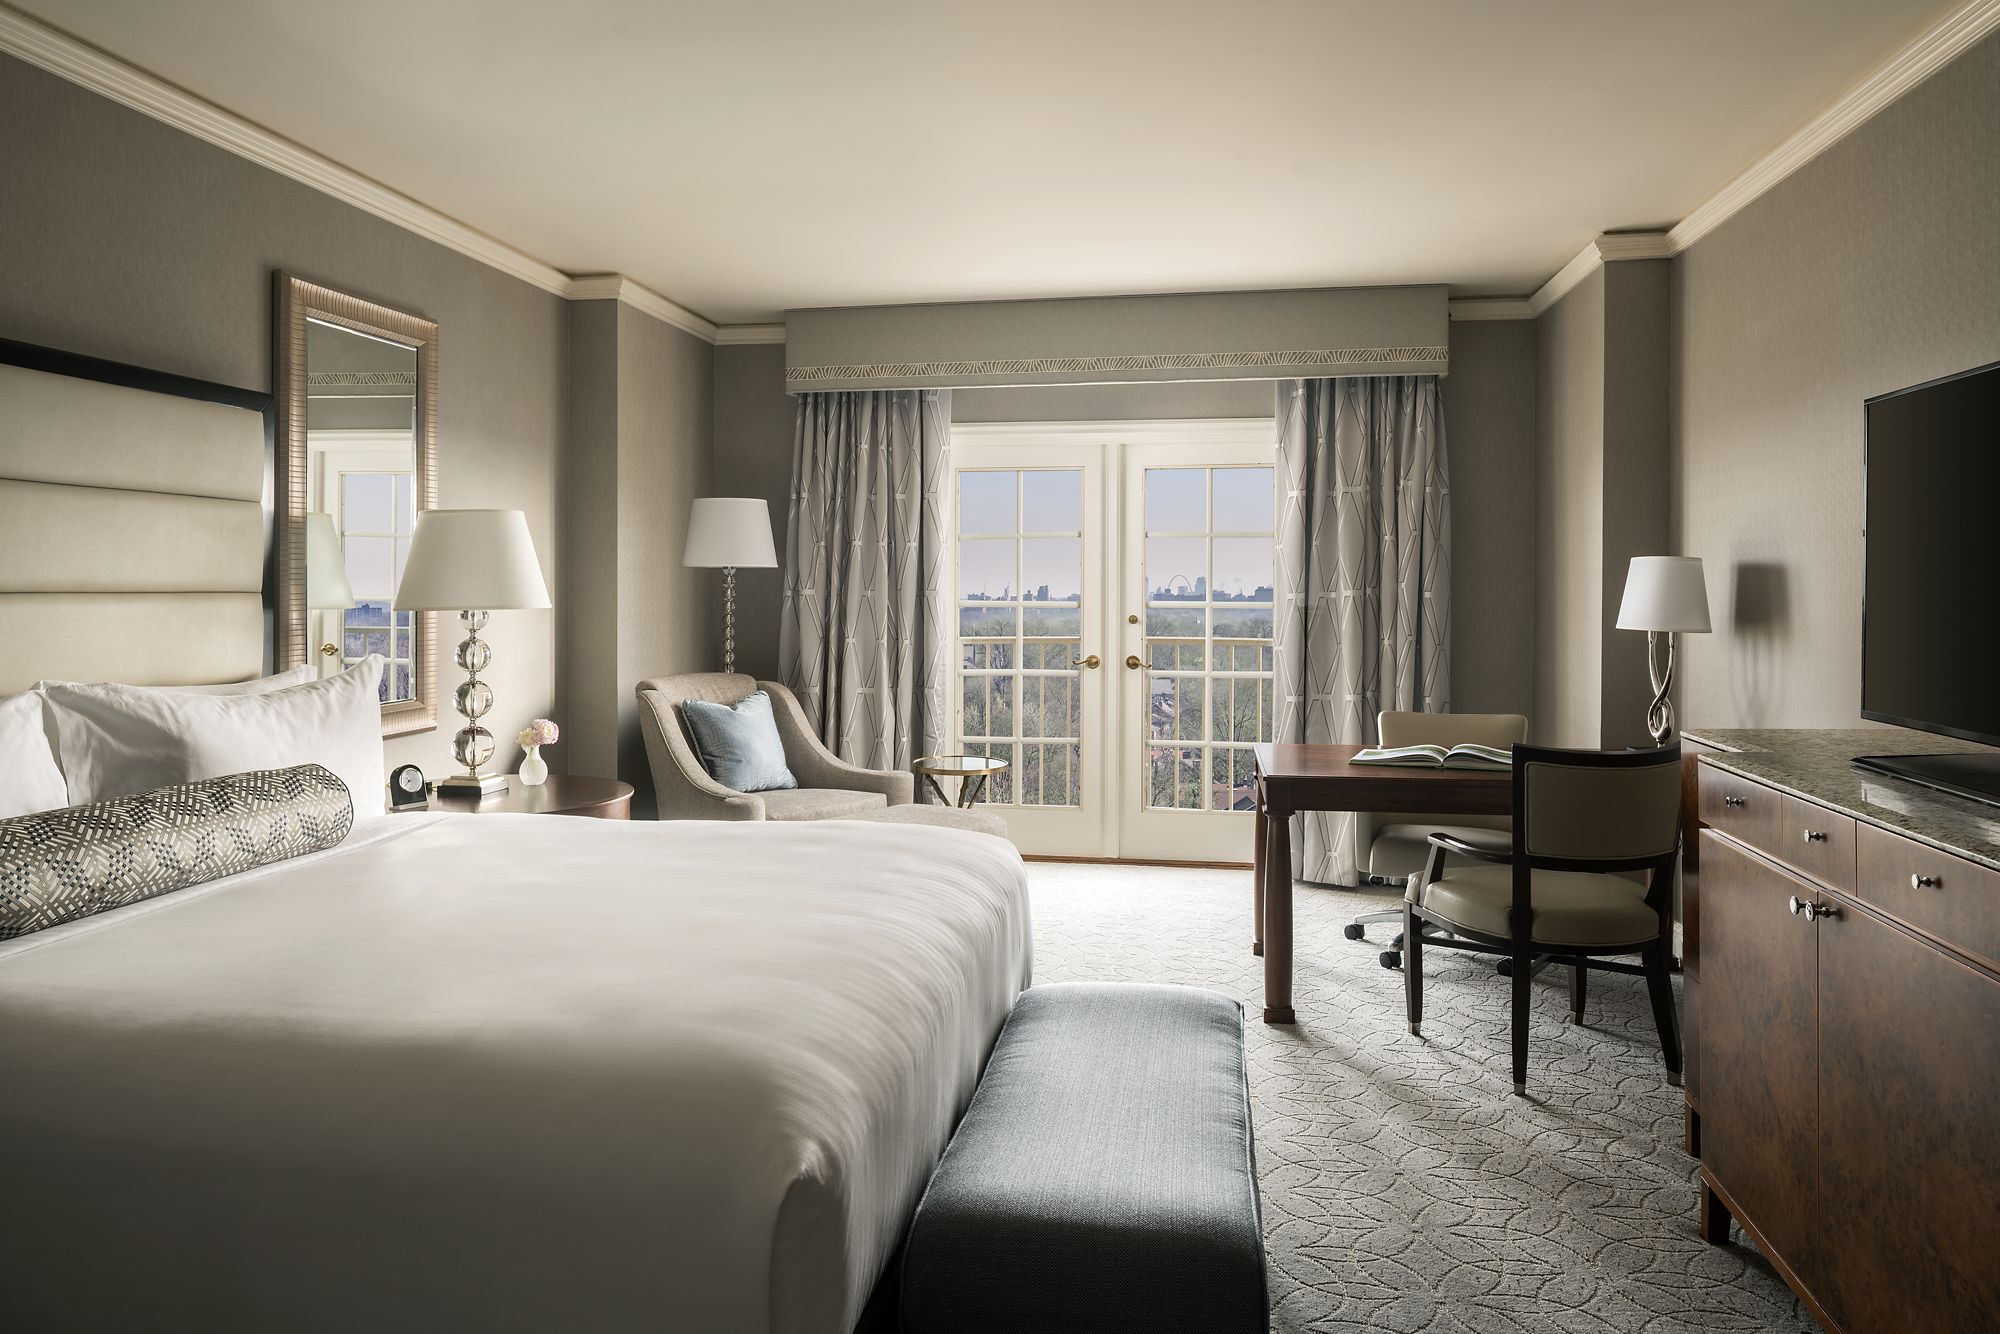 Amazing Deal Alert: Ritz Carlton St. Louis $45 Club Rooms - Points Miles & Martinis